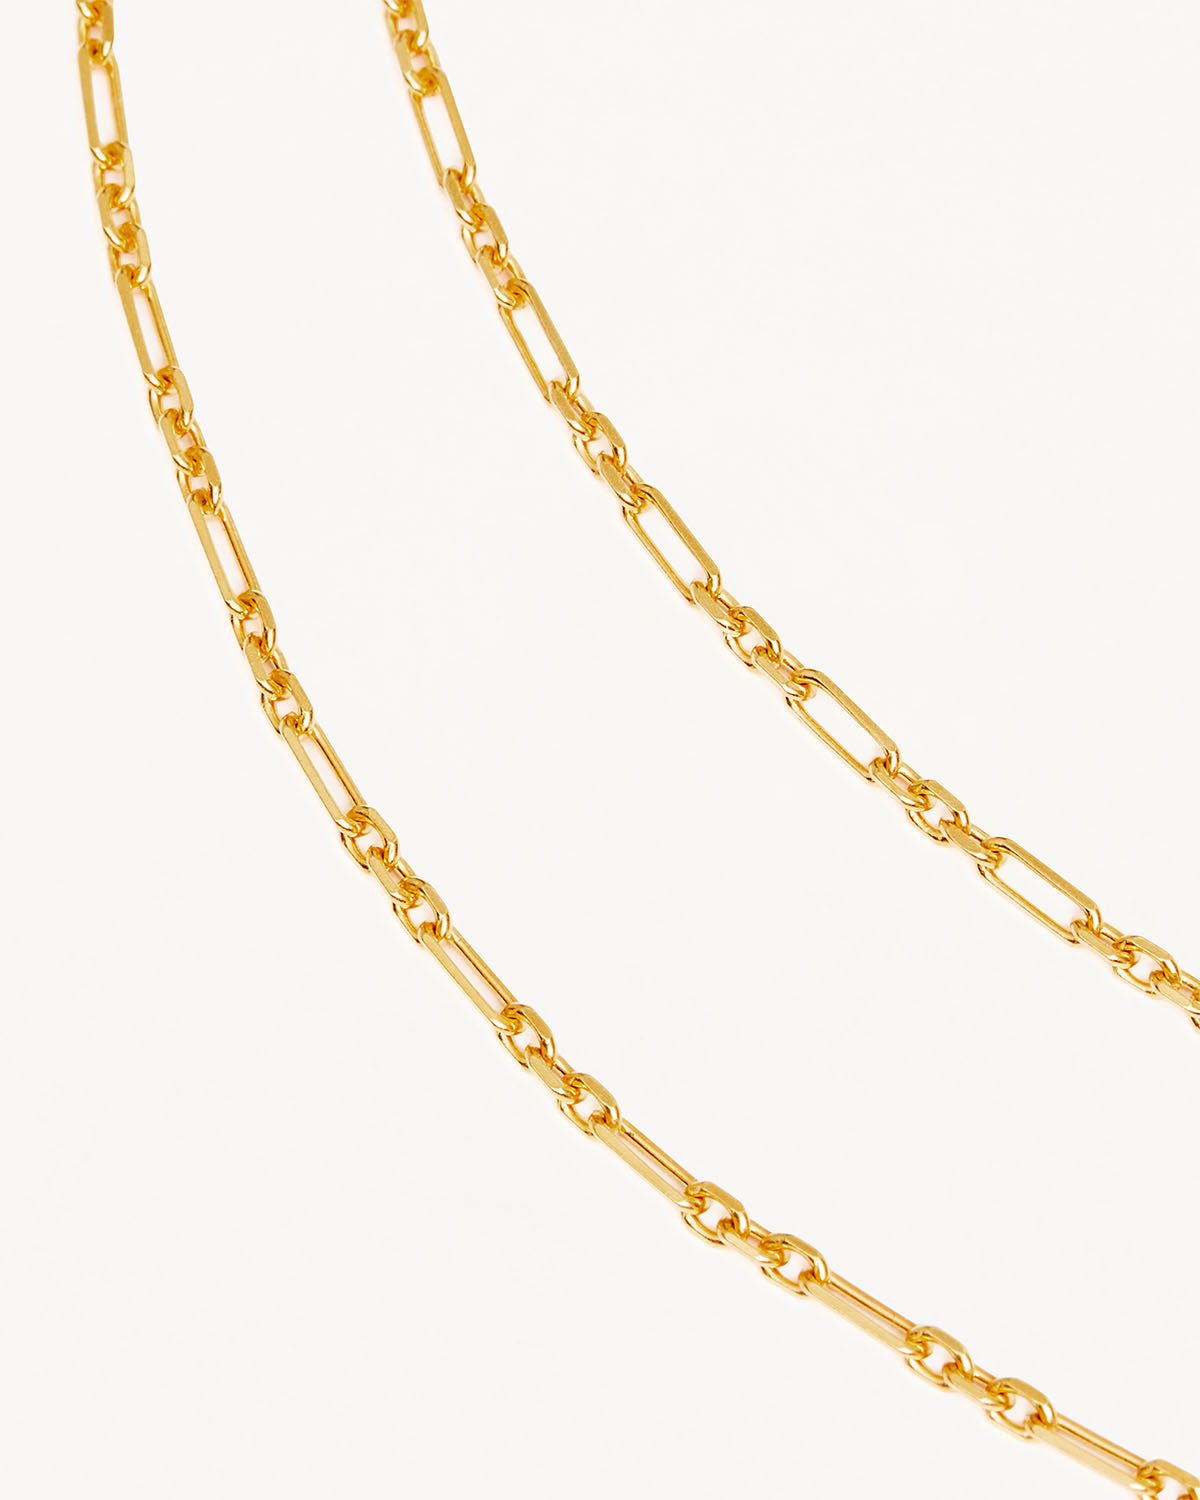 Necklaces & Chokers for Women - Rose Gold Necklaces, Gold Vermeil Necklaces